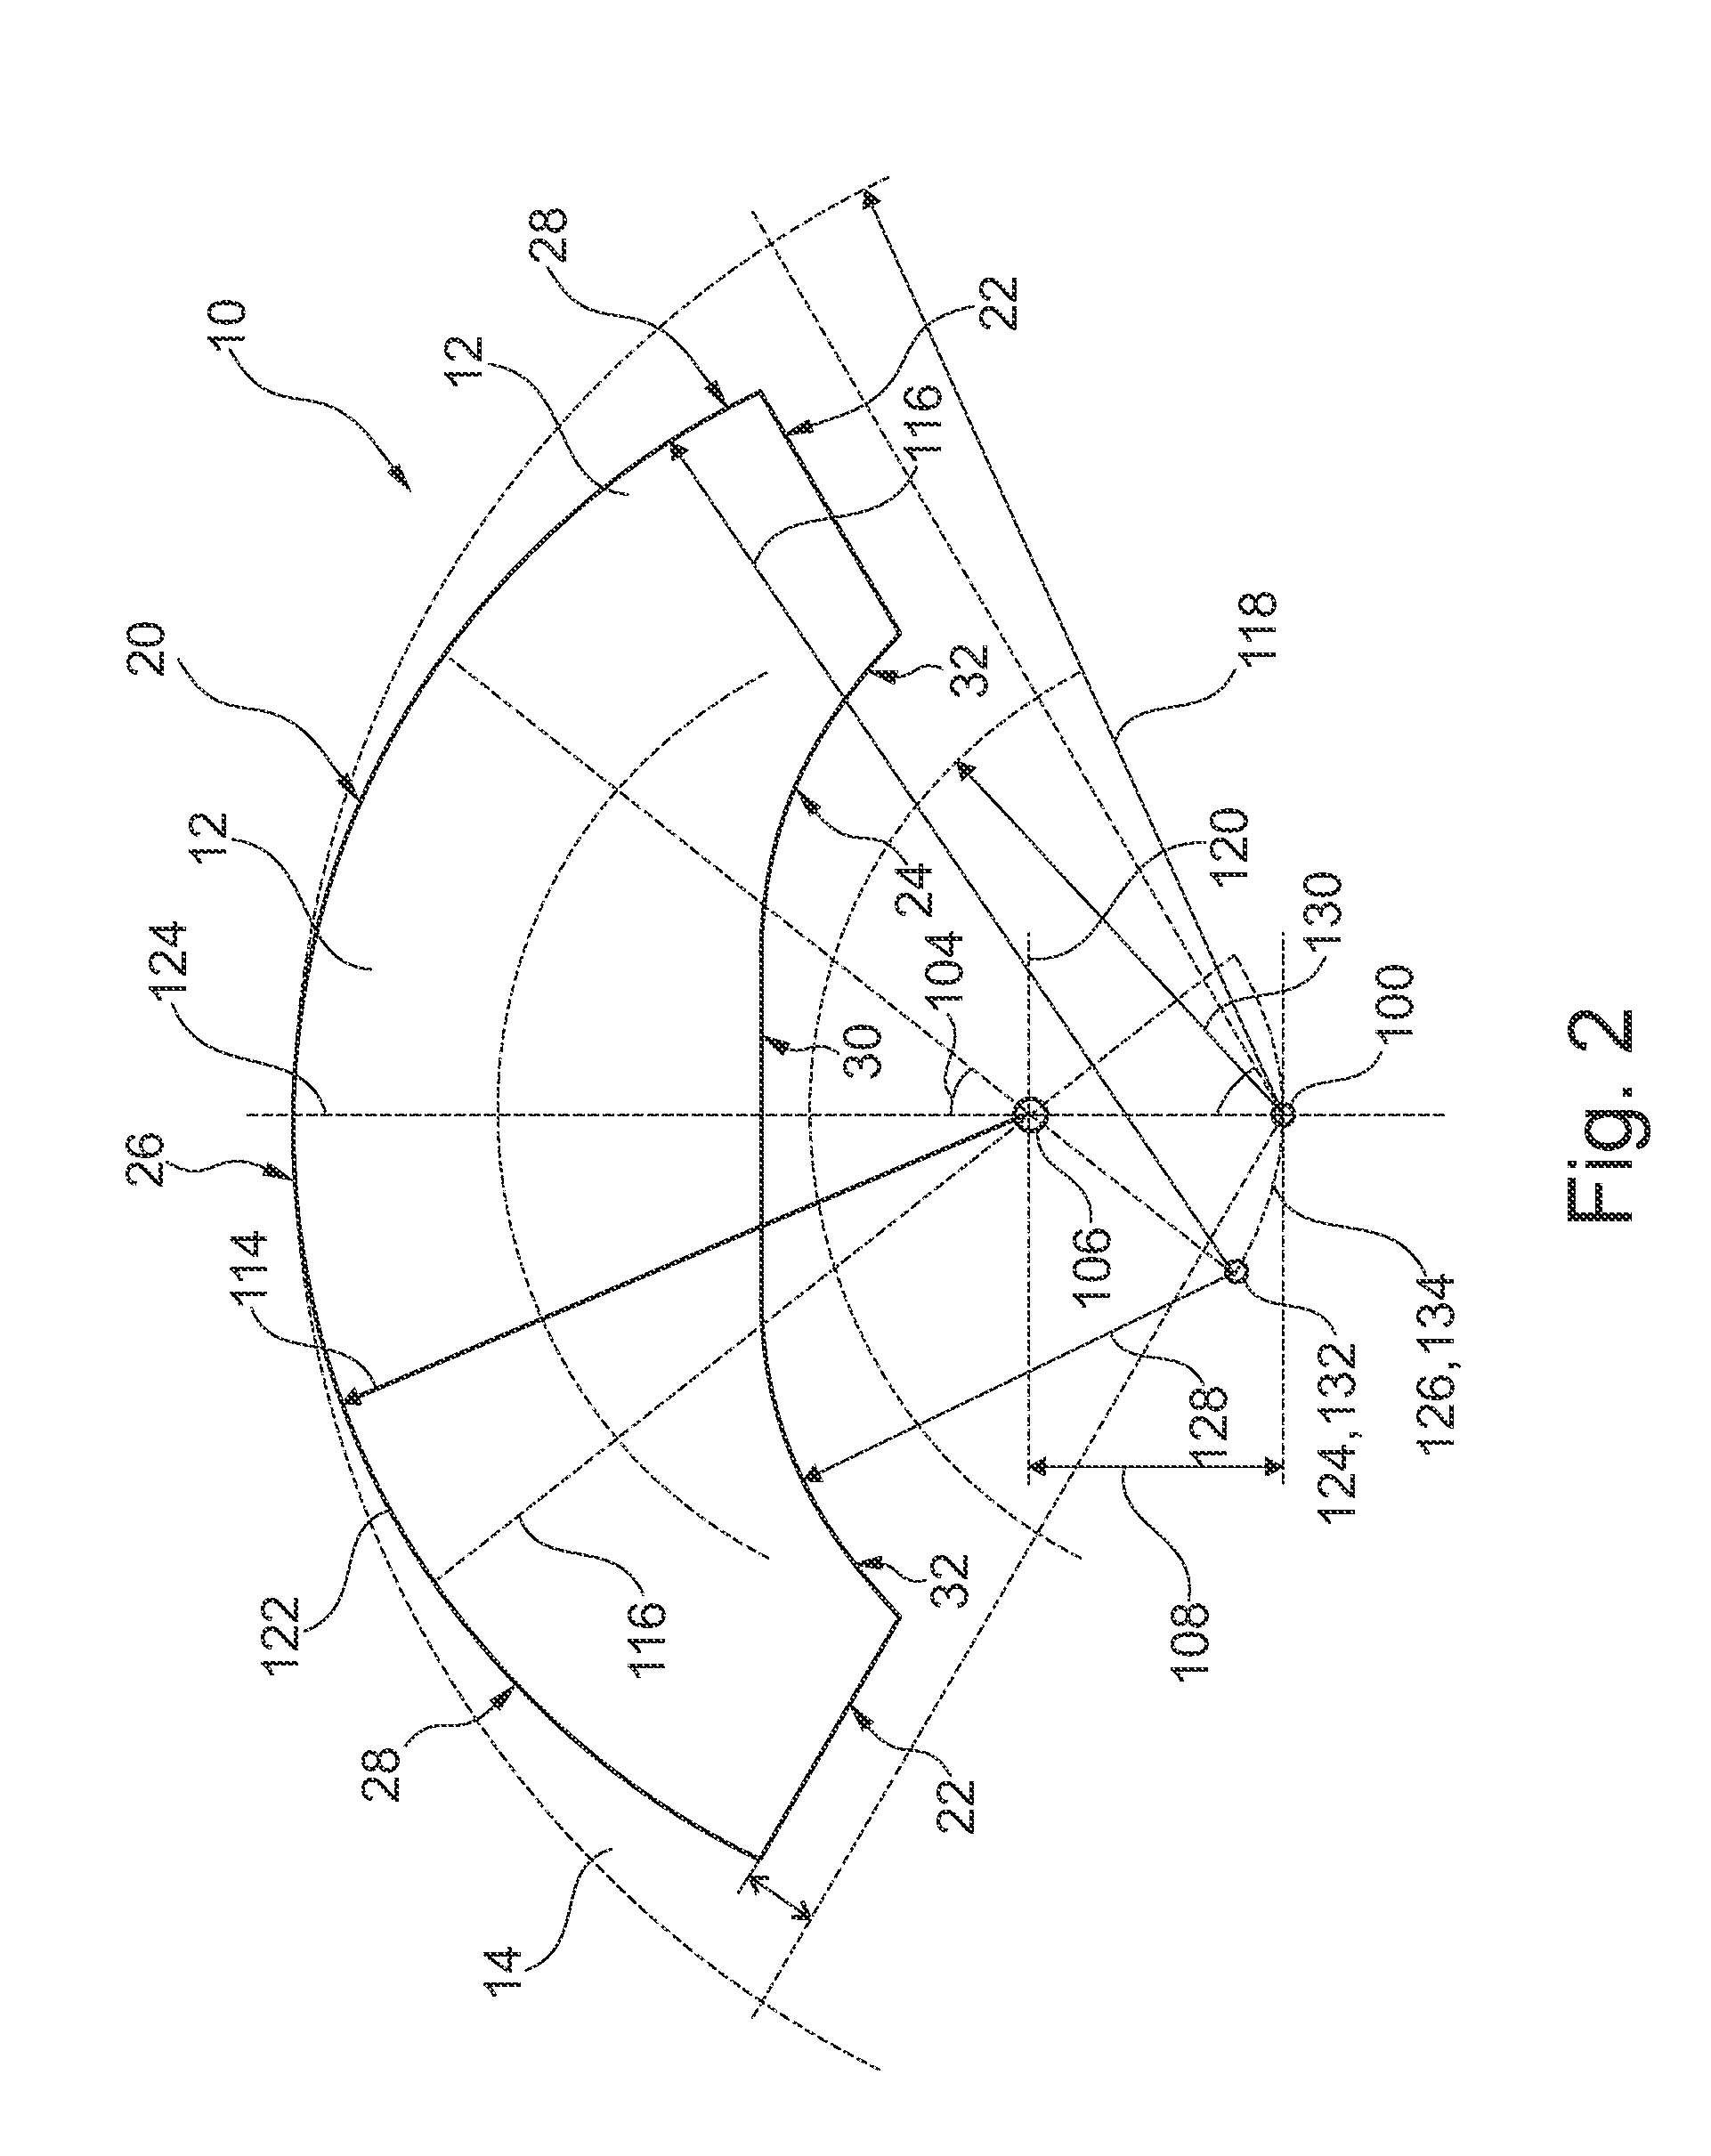 Centrifugal force pendulum device